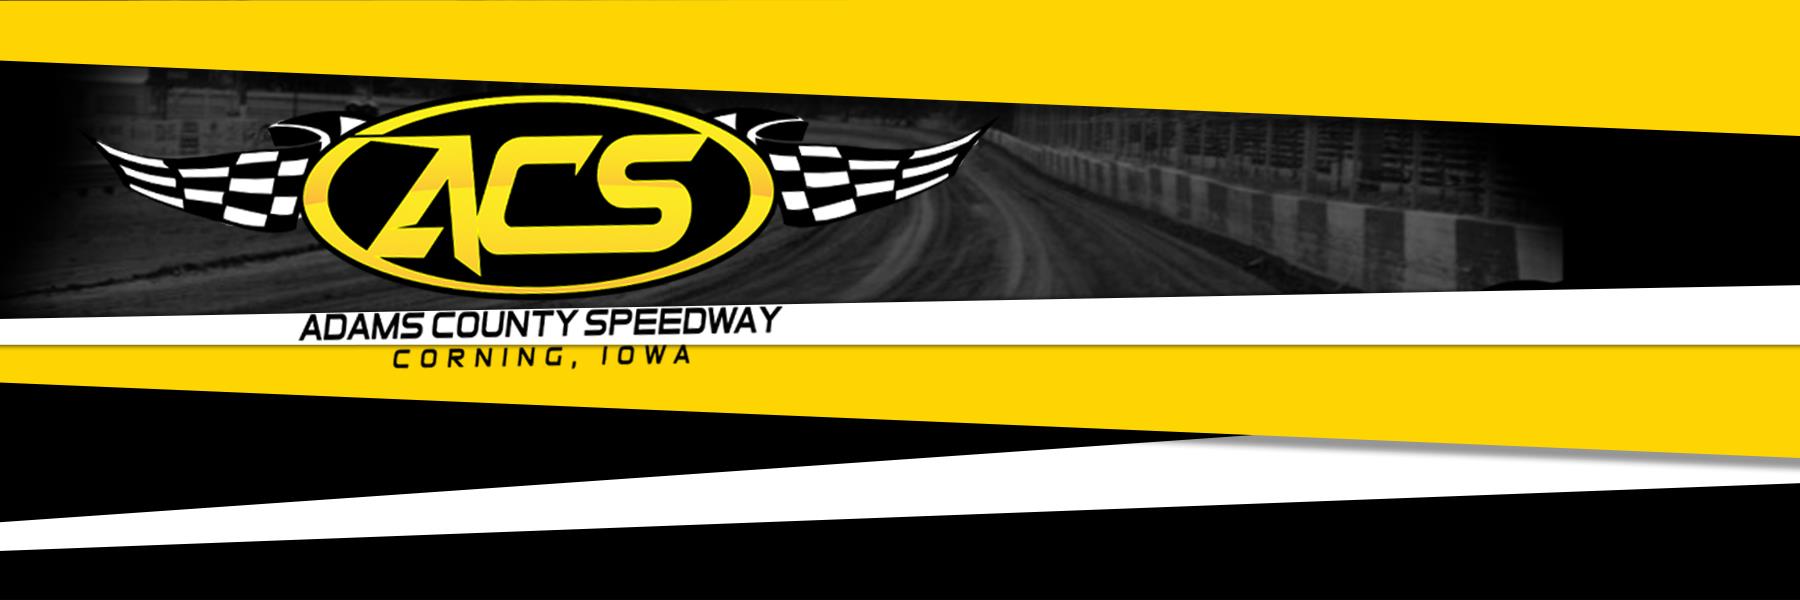 6/18/2022 - Adams County Speedway